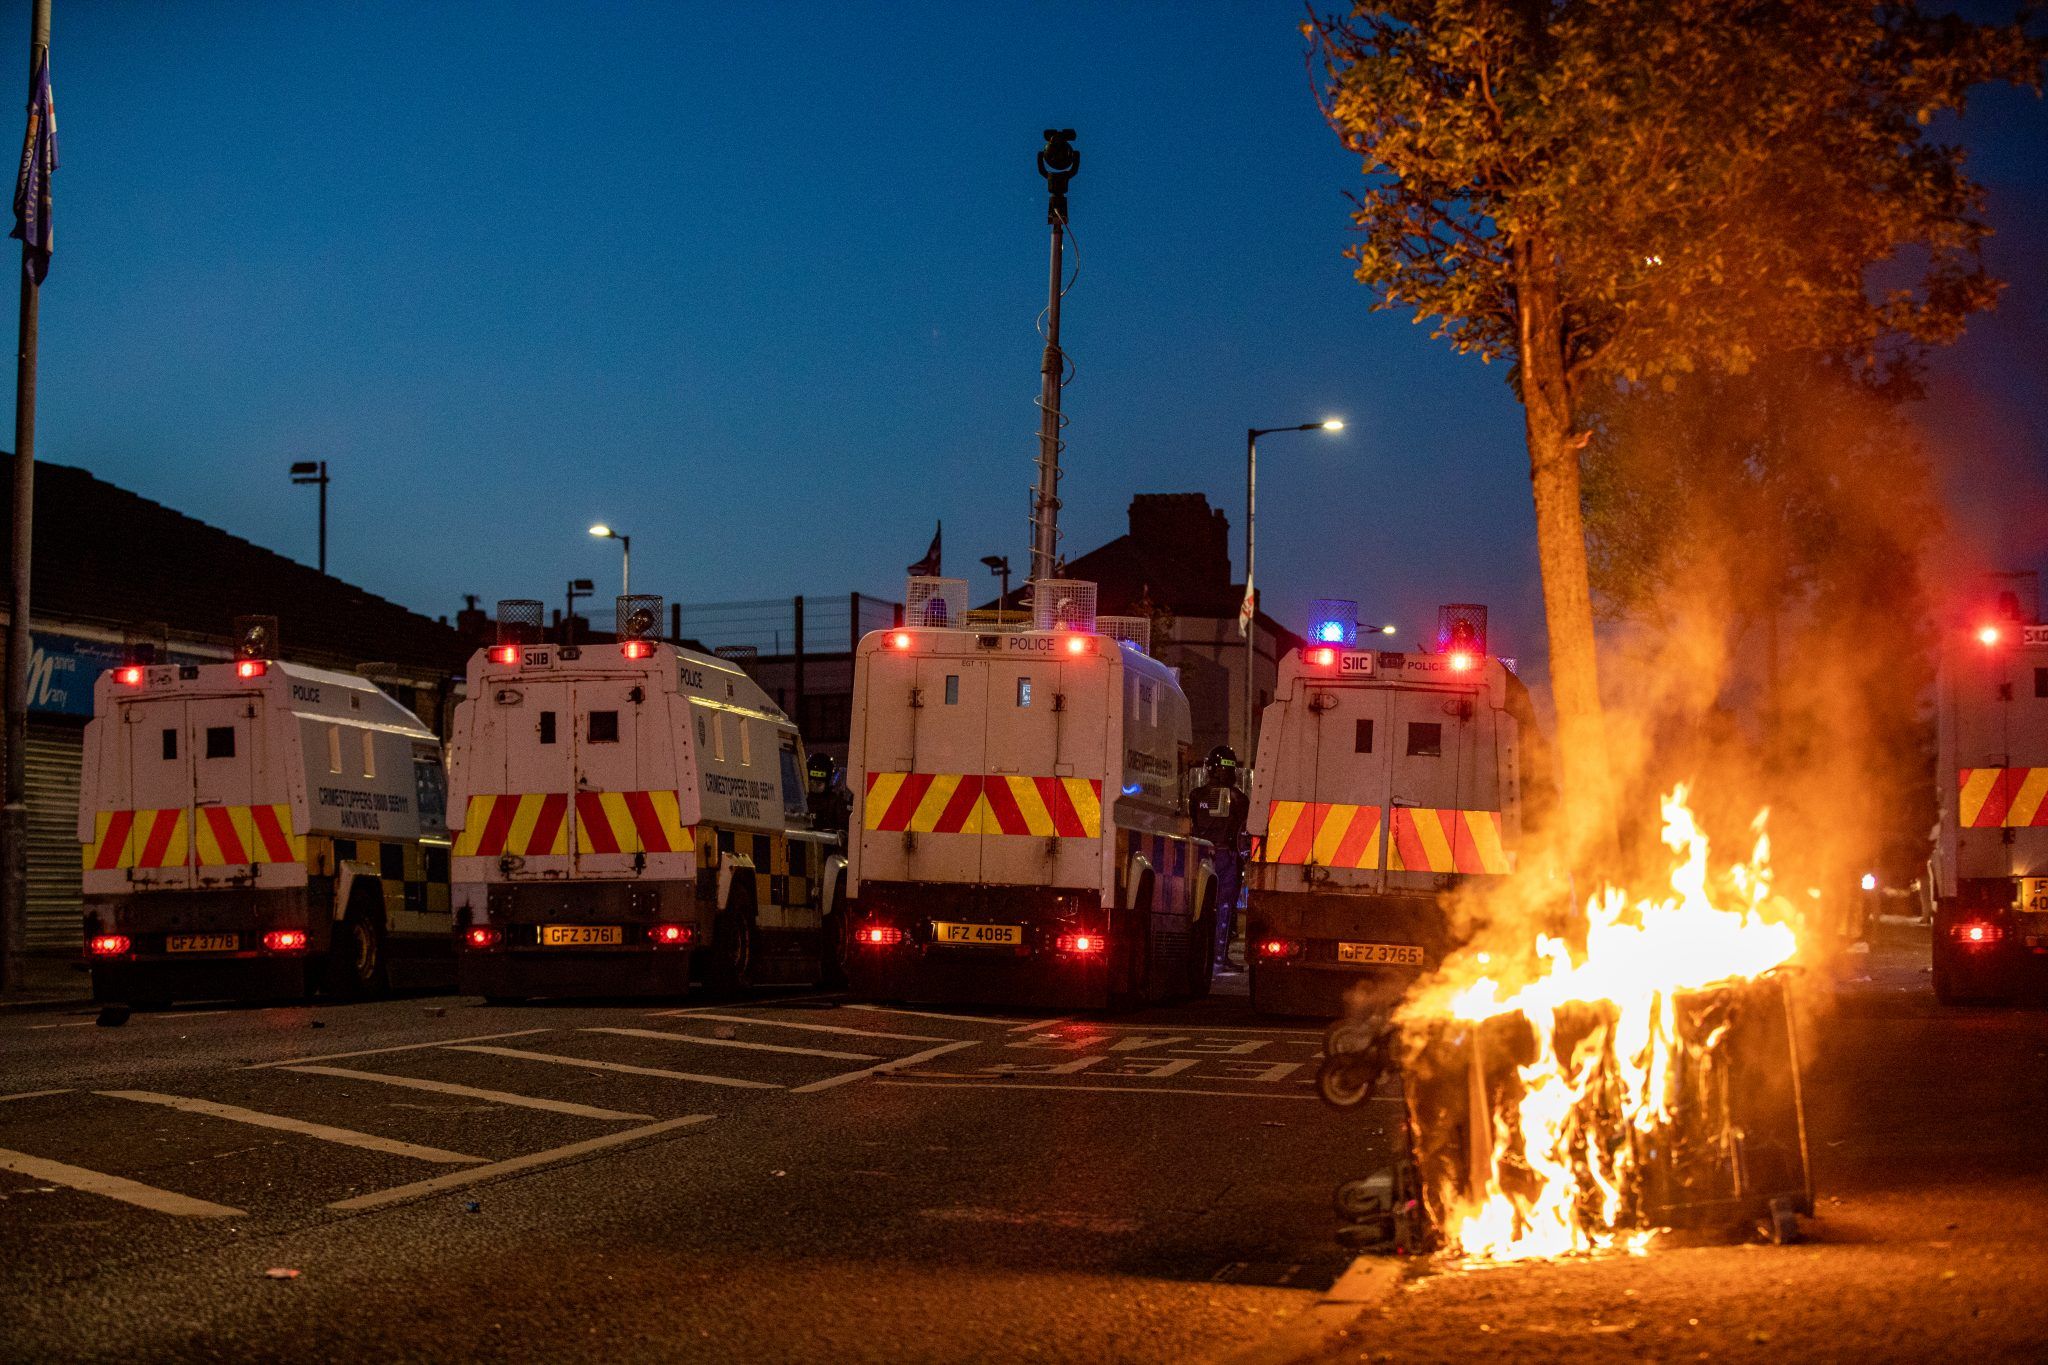 A Biffa bin burns behind a line of riot vans in Belfast